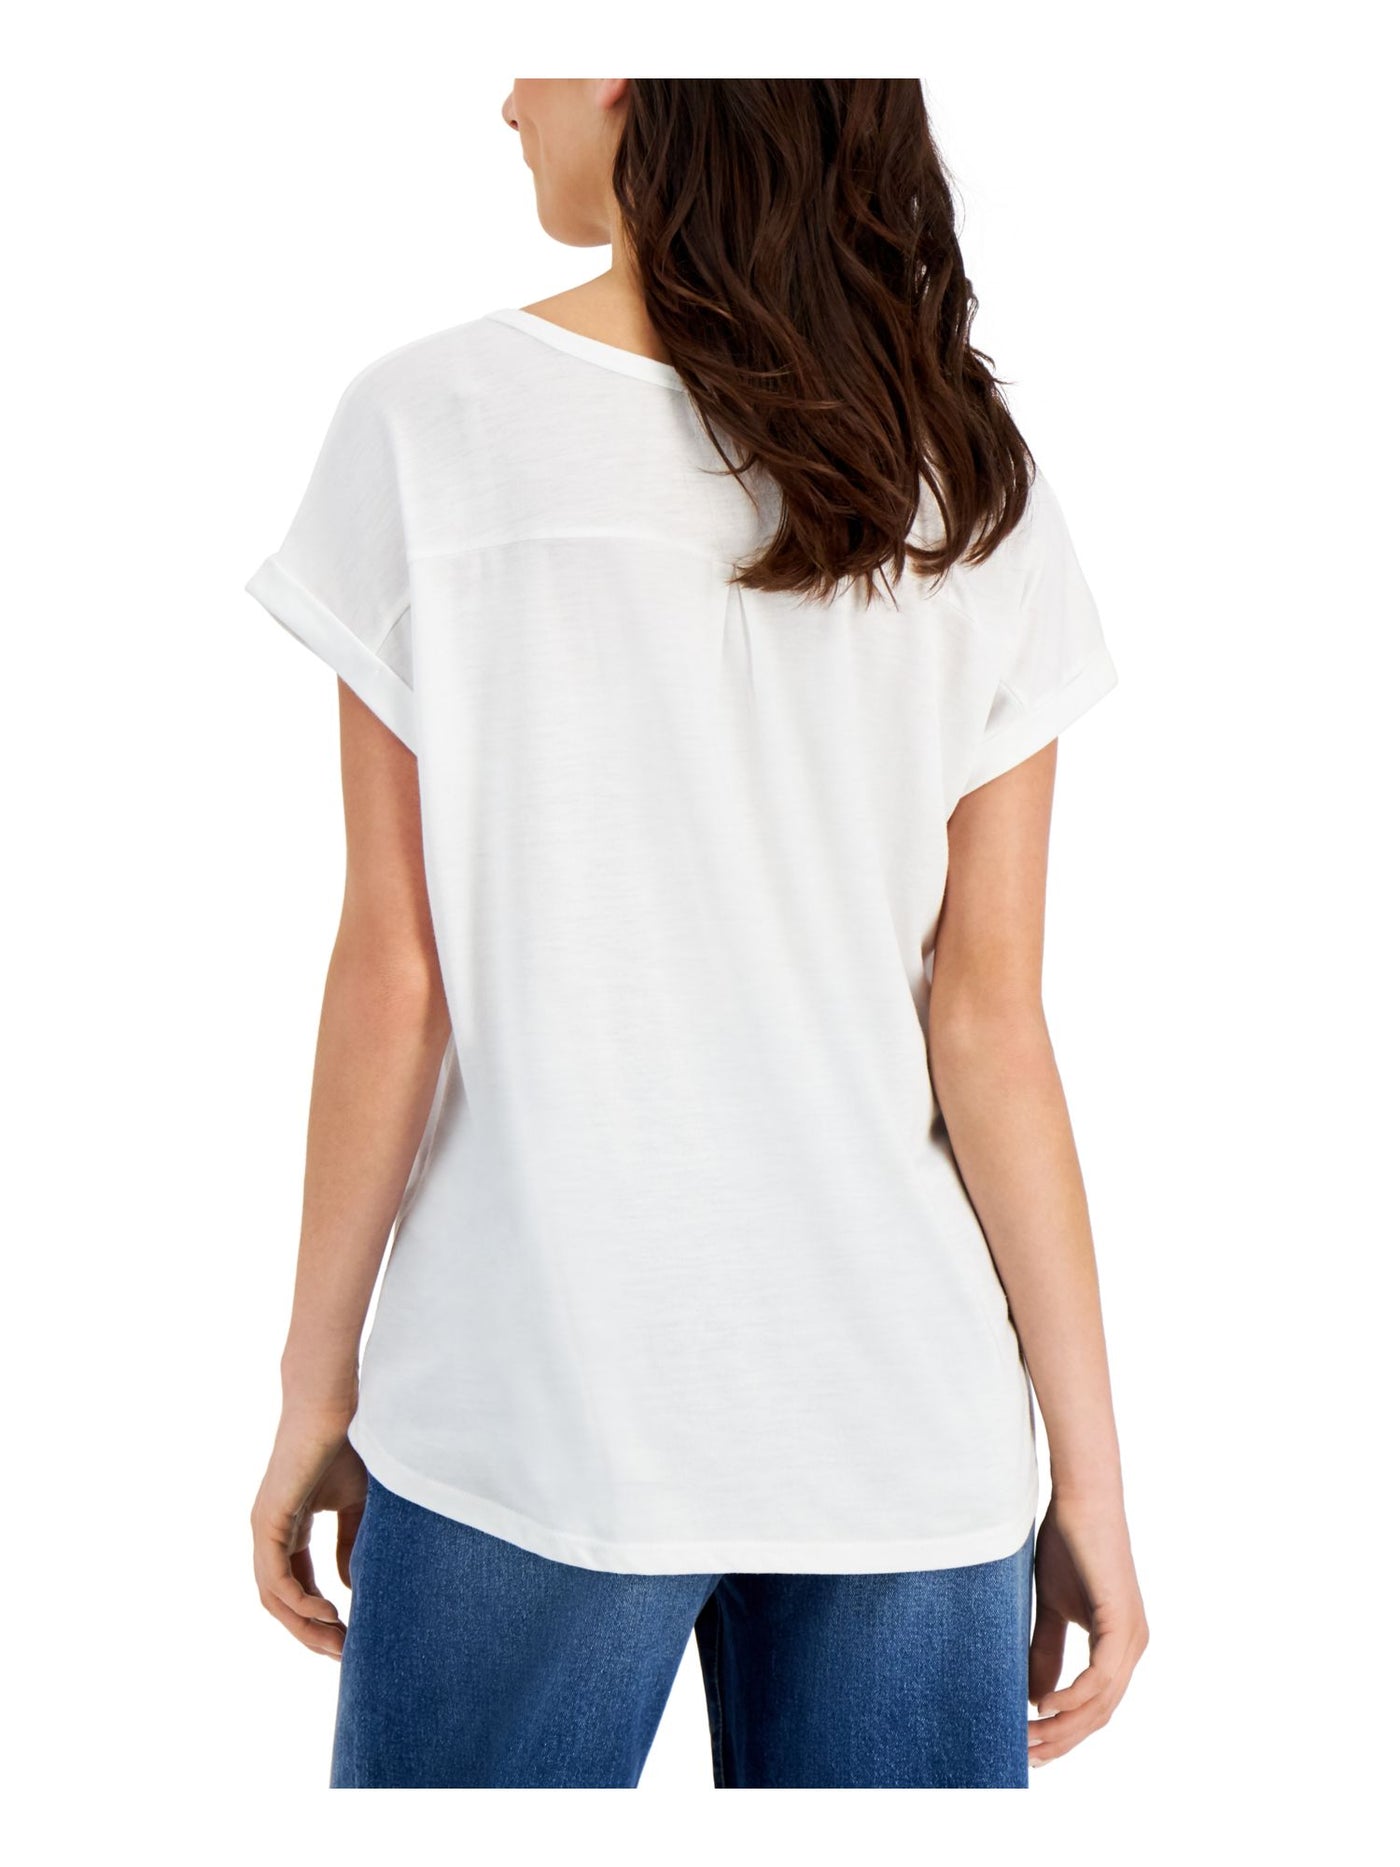 STYLE & COMPANY Womens White Graphic Short Sleeve V Neck T-Shirt Plus 3X